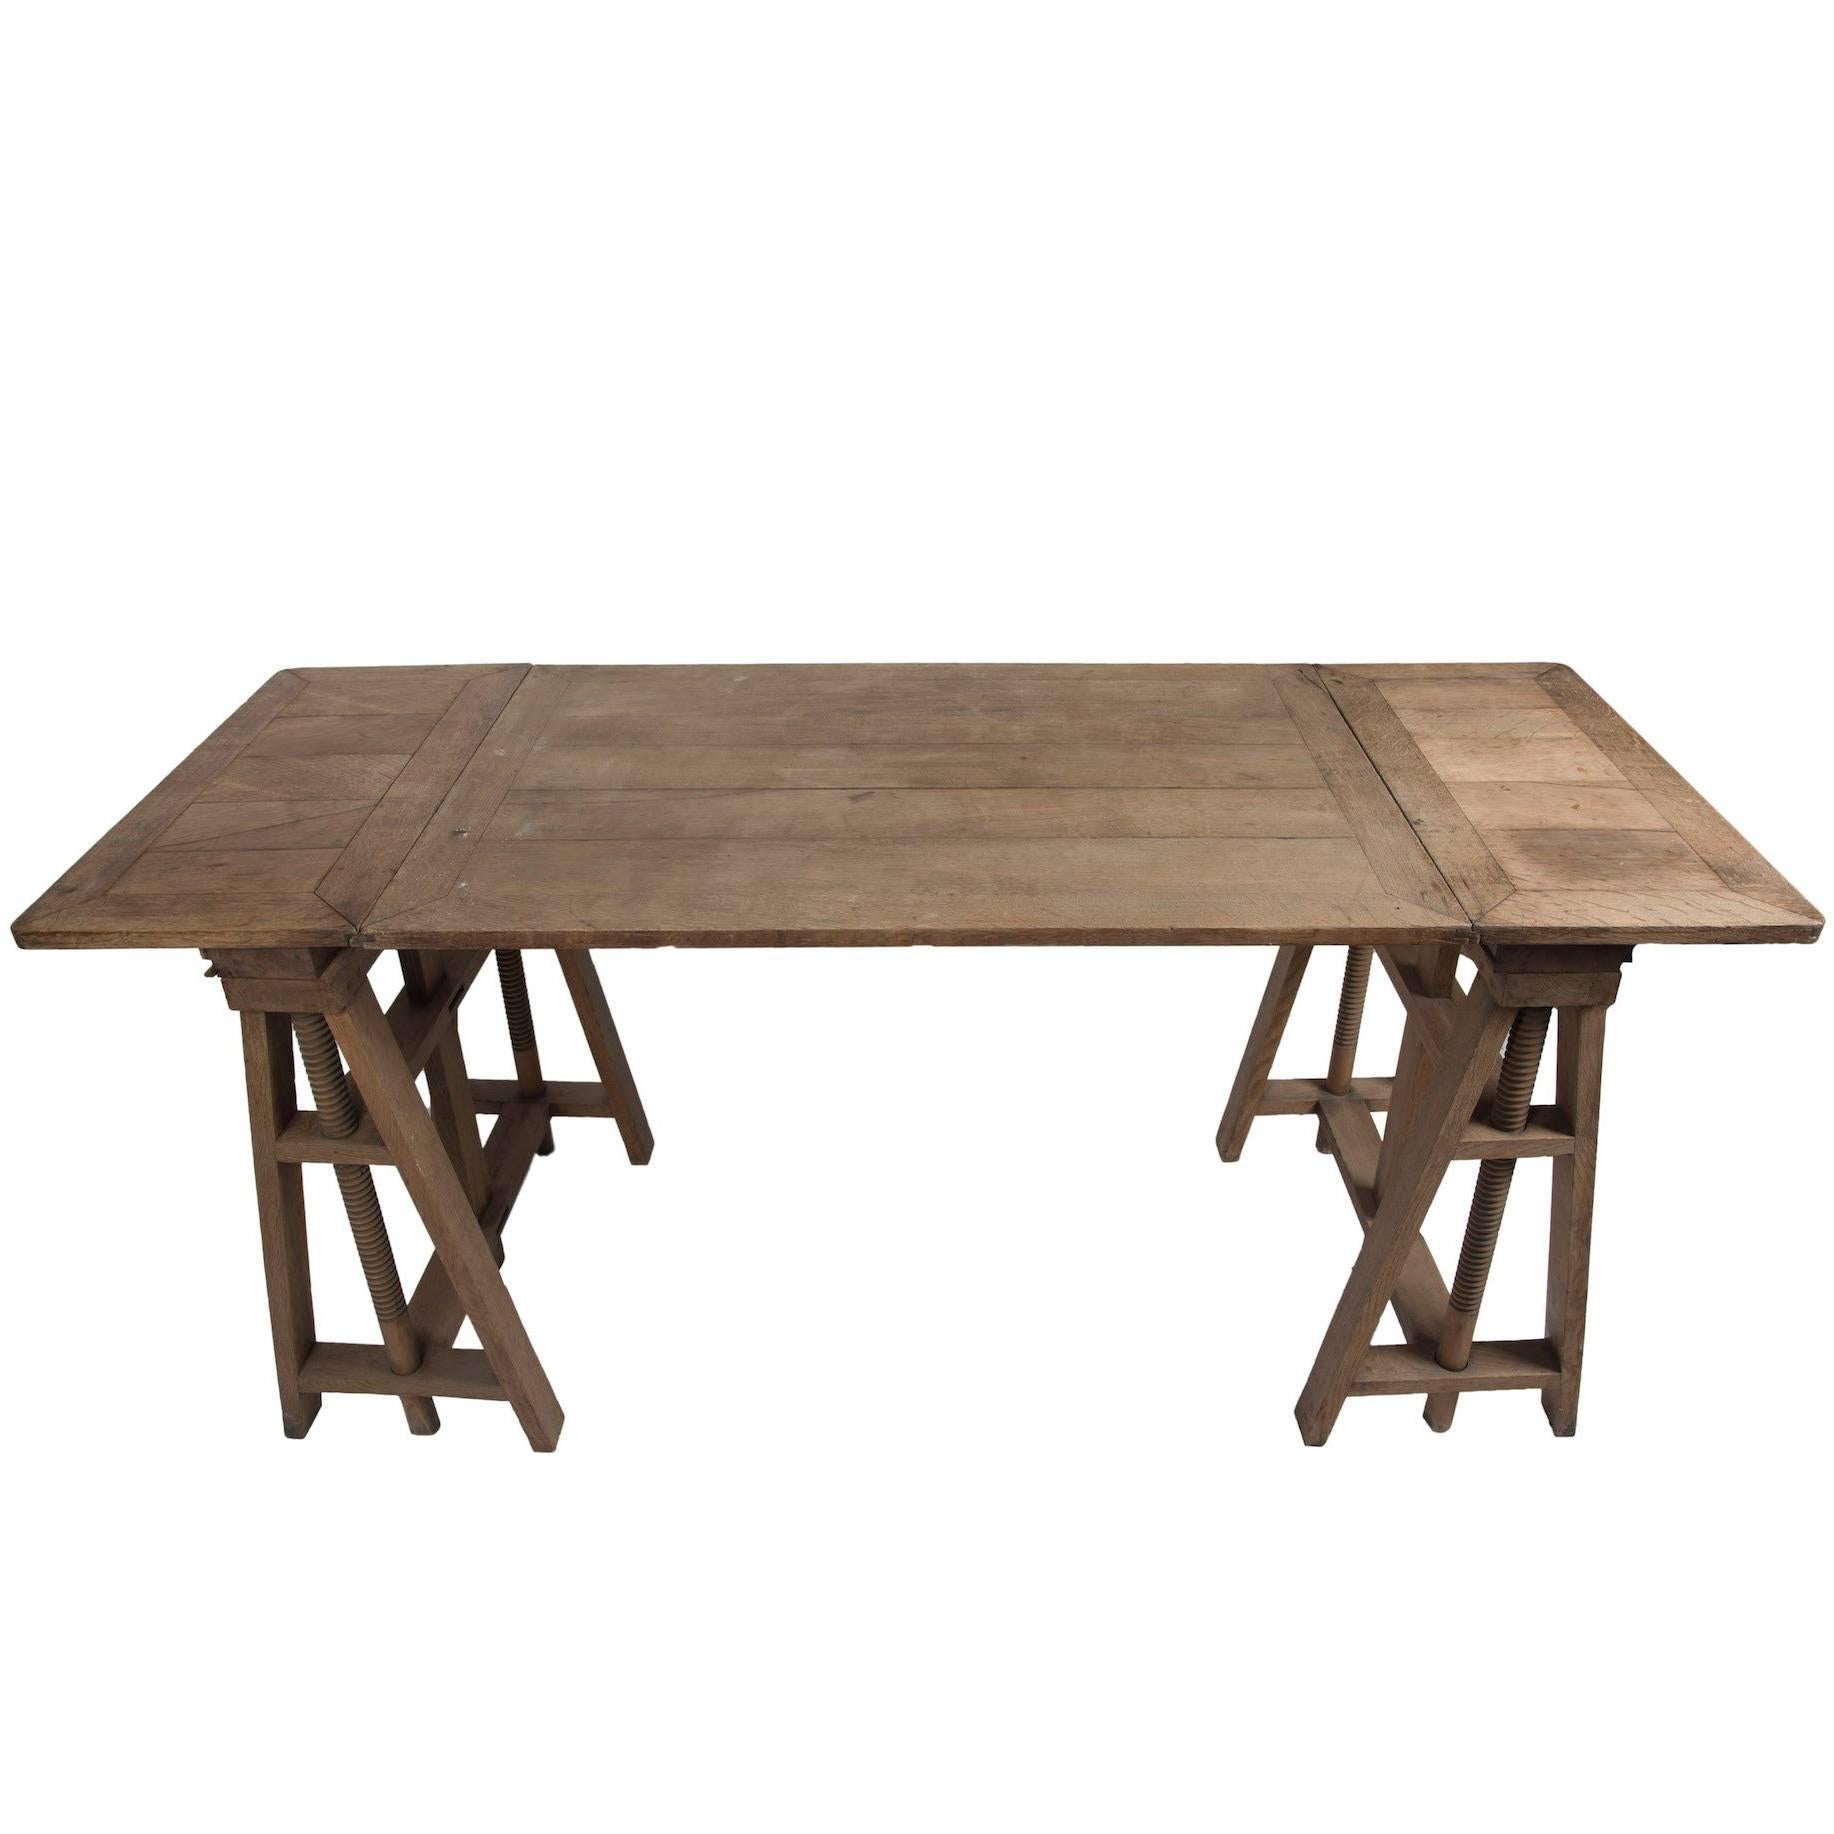 Vernacular Trestle Table For Sale